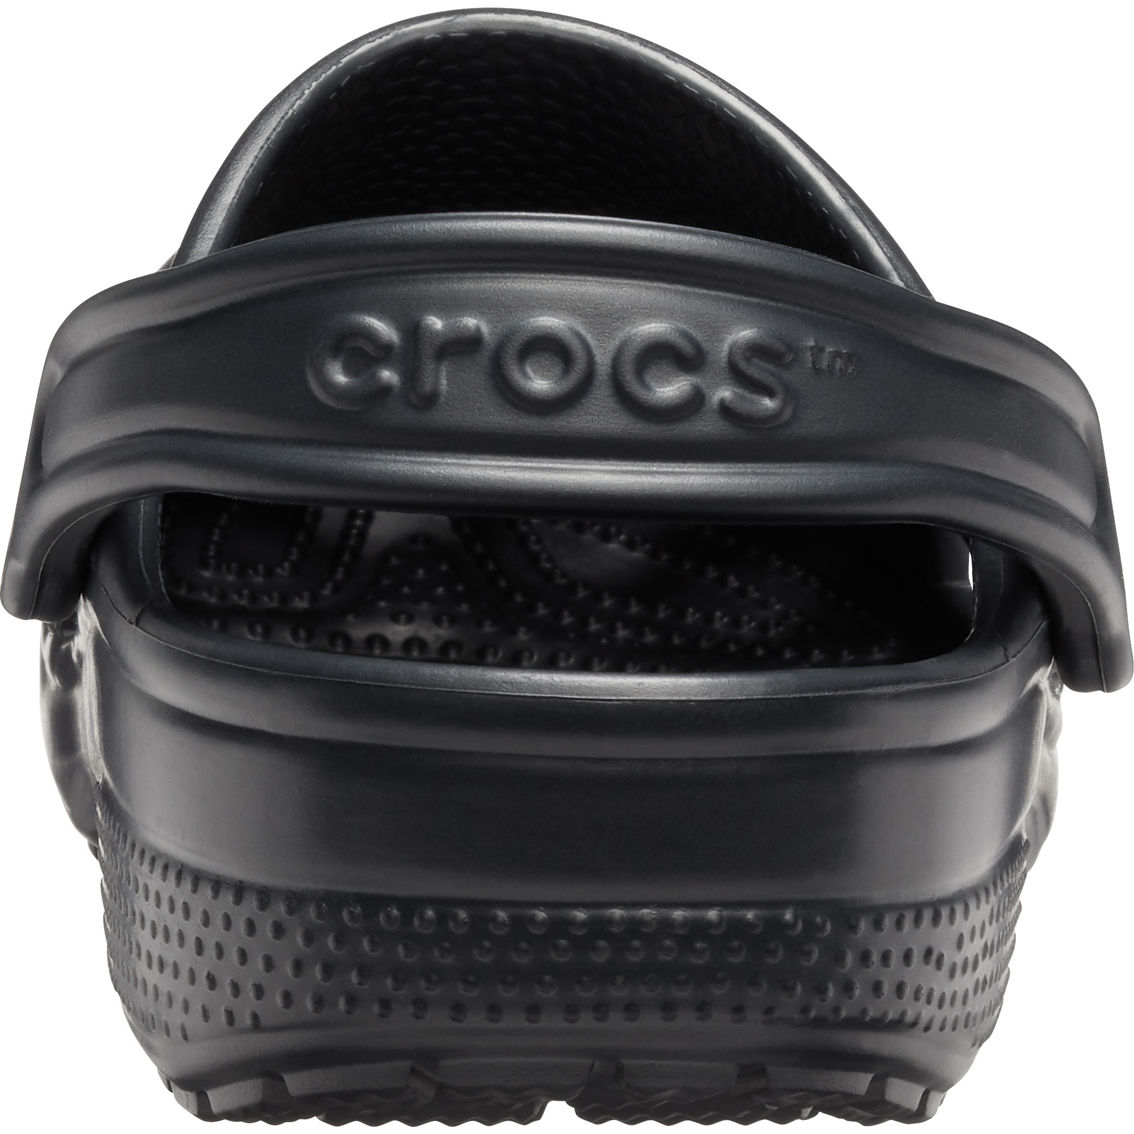 Crocs Men's / Women's Classic Clogs - Image 6 of 6